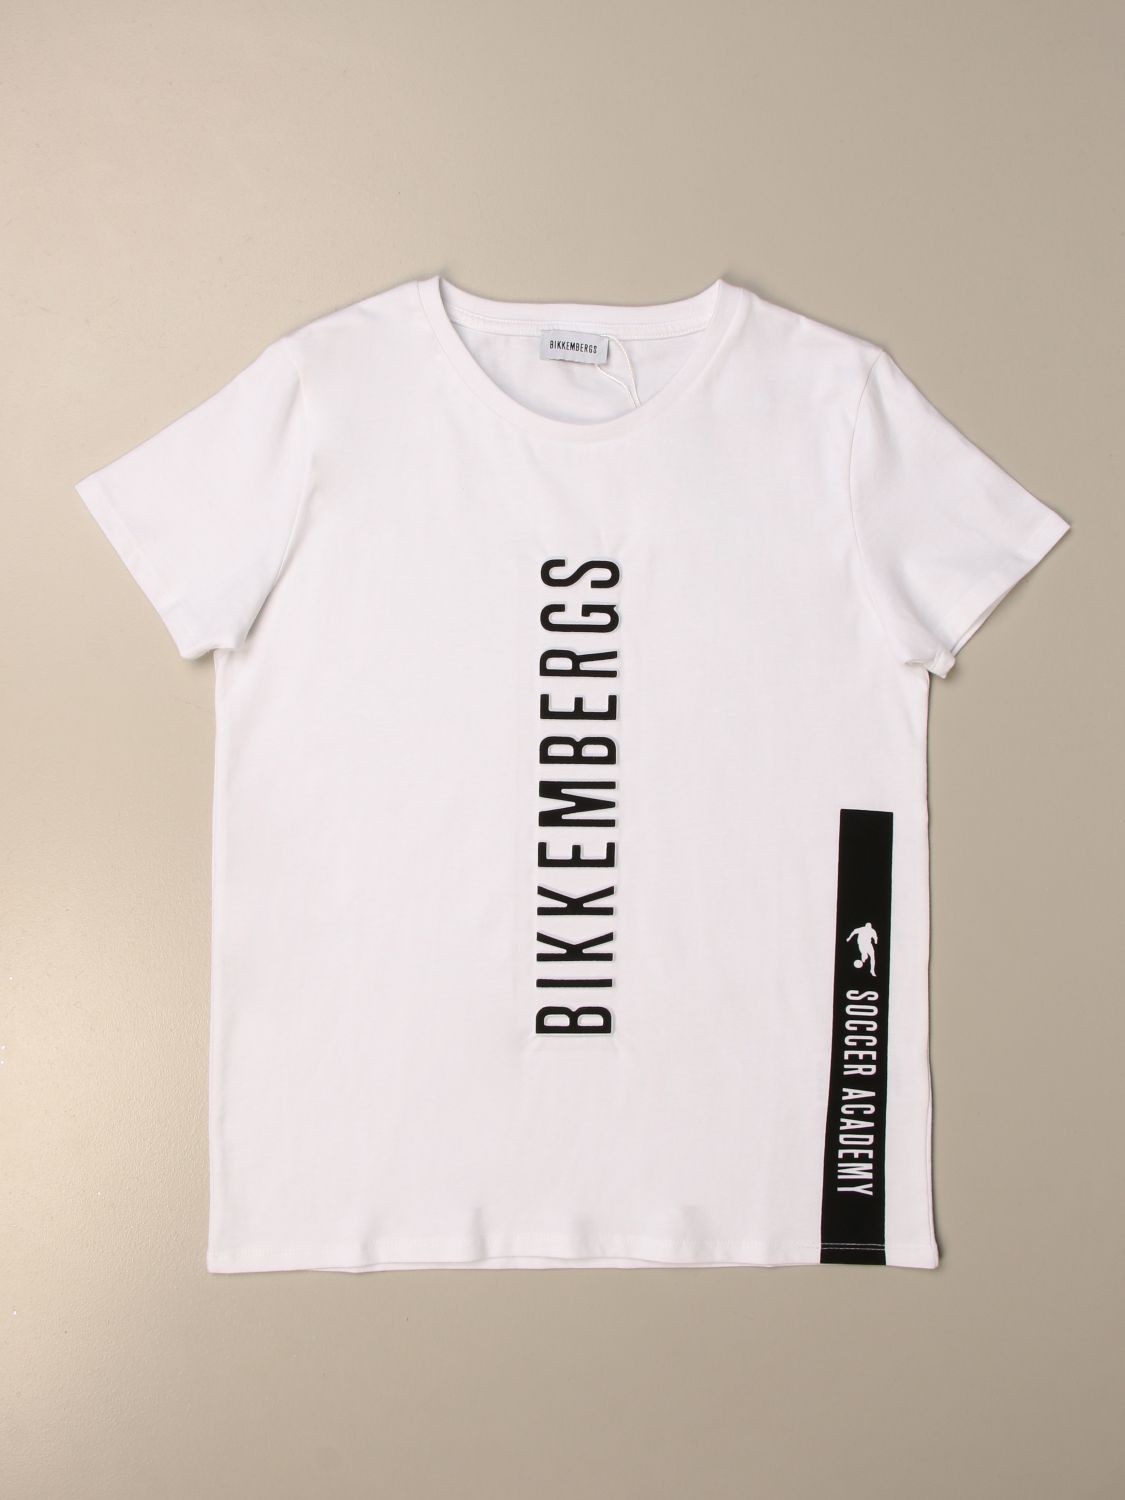 Bikkembergs T Shirt Hot Sale, 53% OFF | www.ingeniovirtual.com